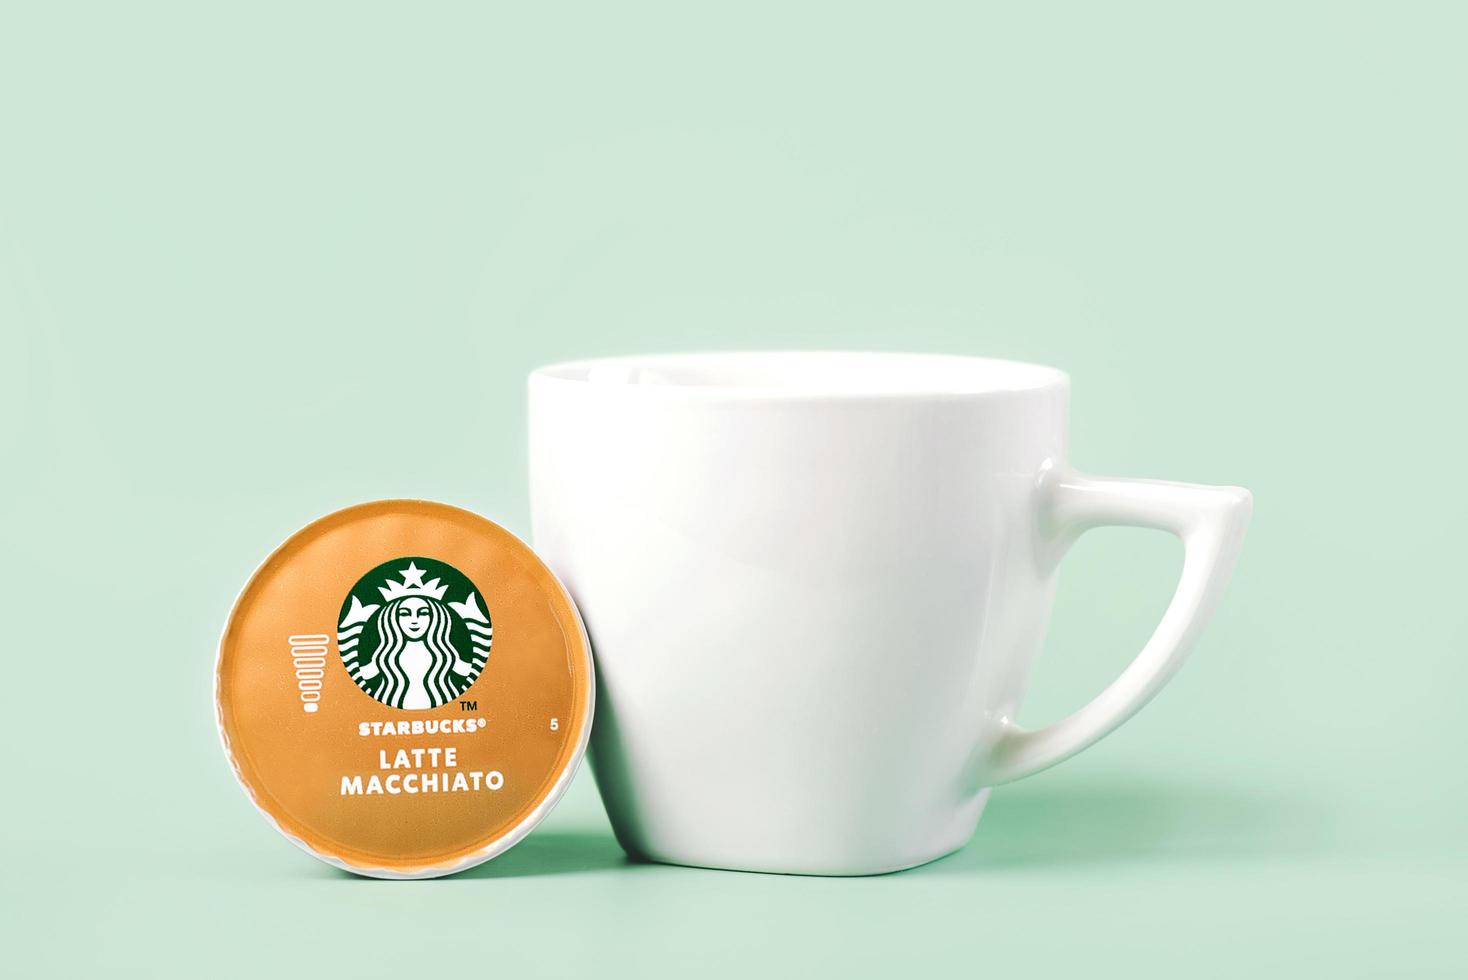 Starbucks latte Macchiato coffee capsule next to white cup of coffee photo